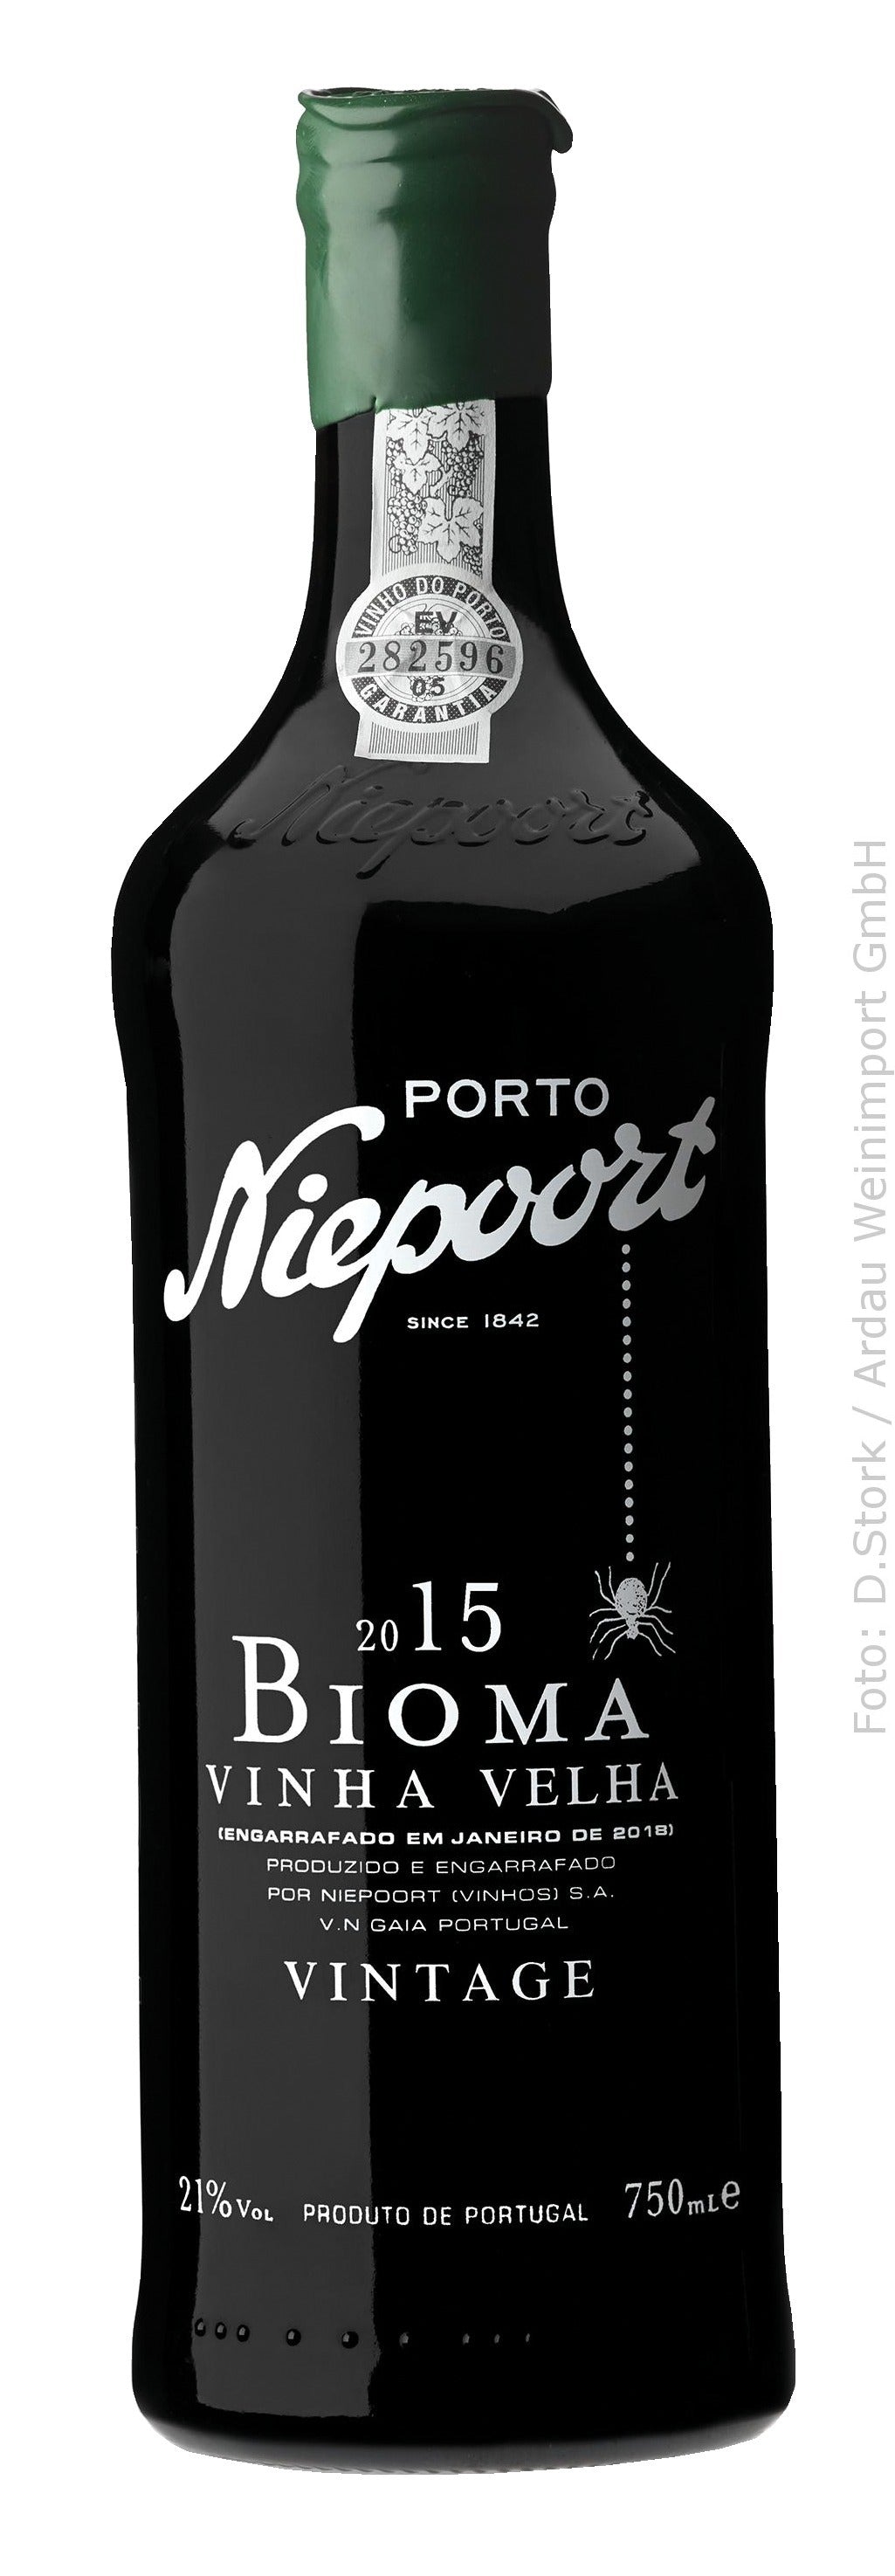 Niepoort - Bioma Vintage 2015, Vinha Velha / Portwein